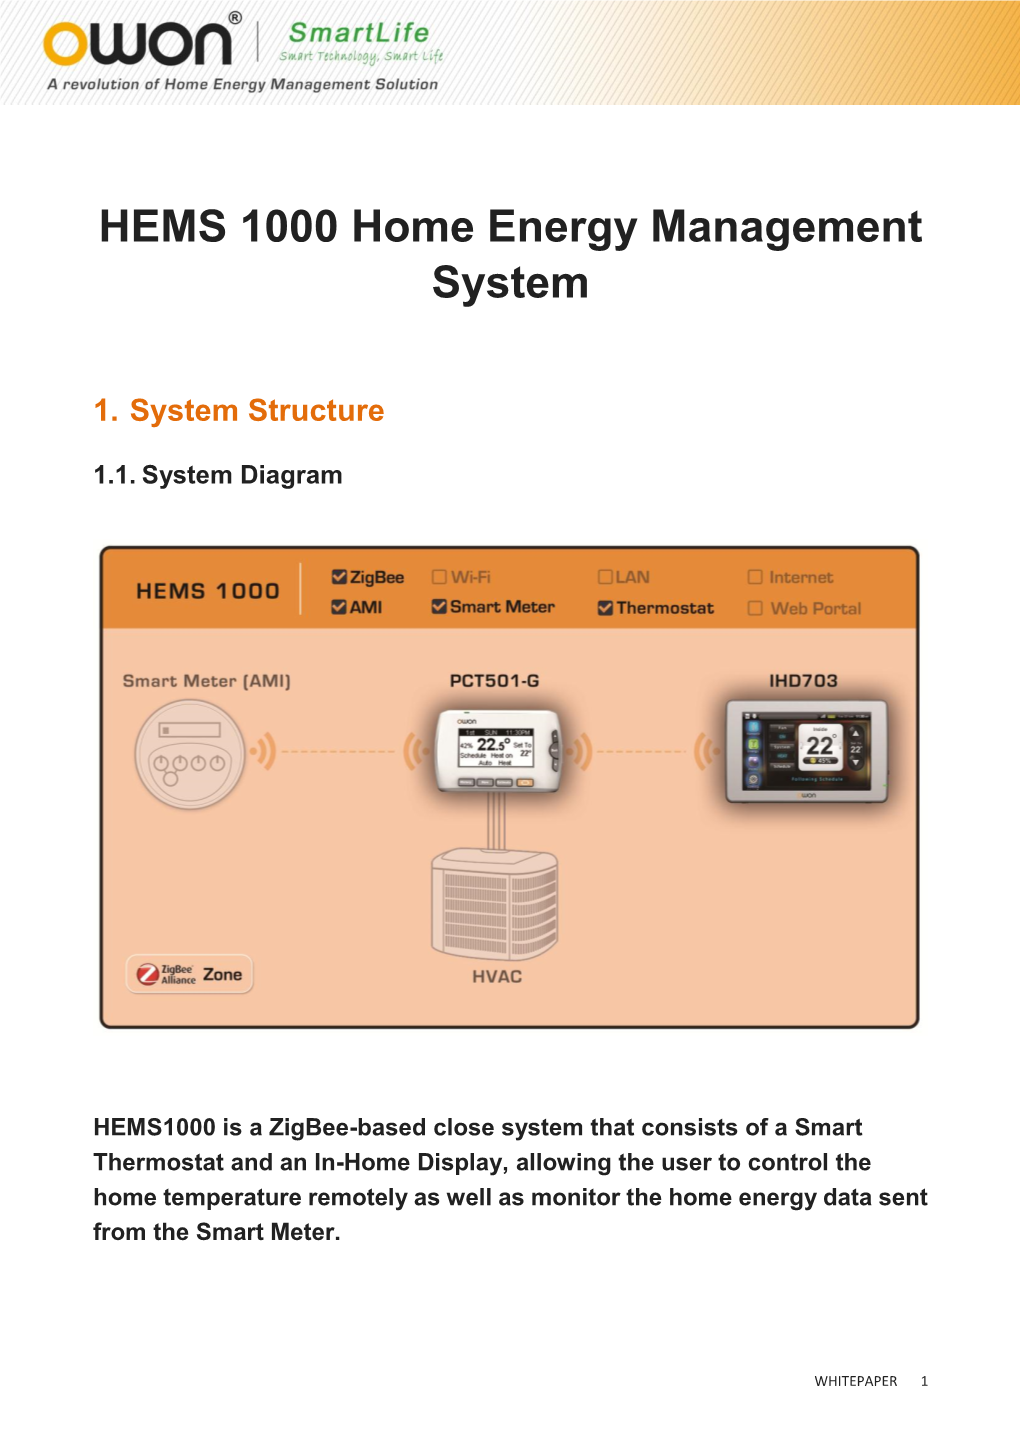 HEMS 1000 Home Energy Management System